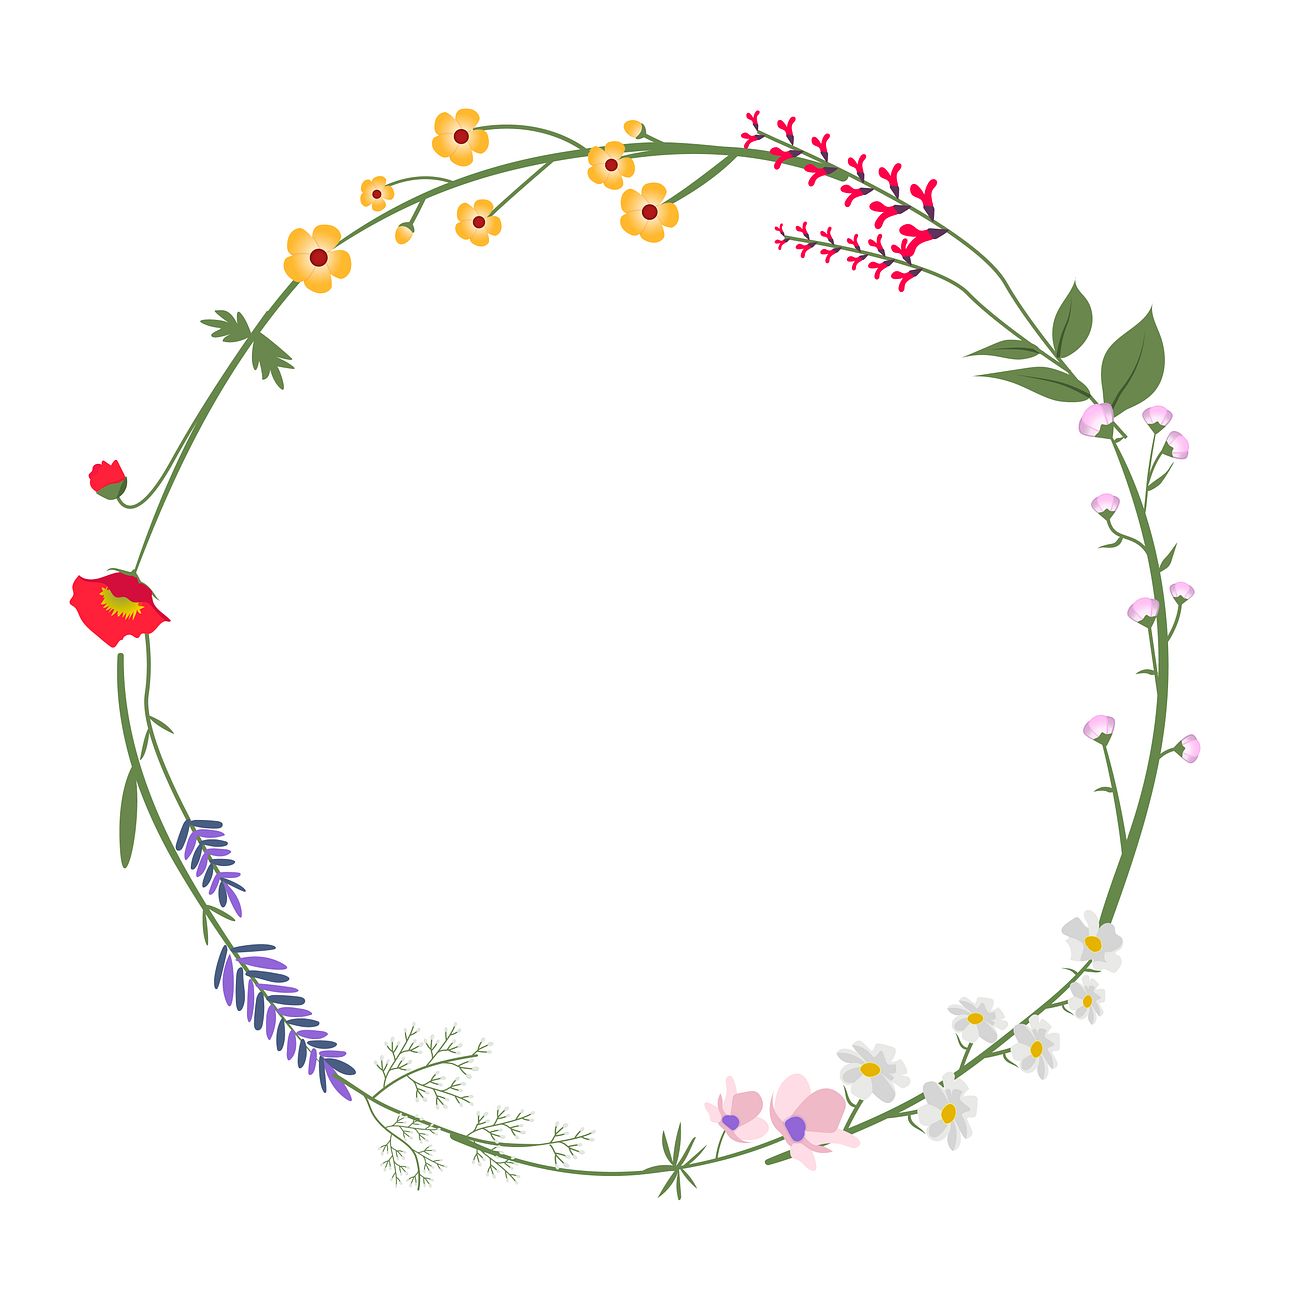 Download Round Wild Flower Vector Illustration | Royalty free ...